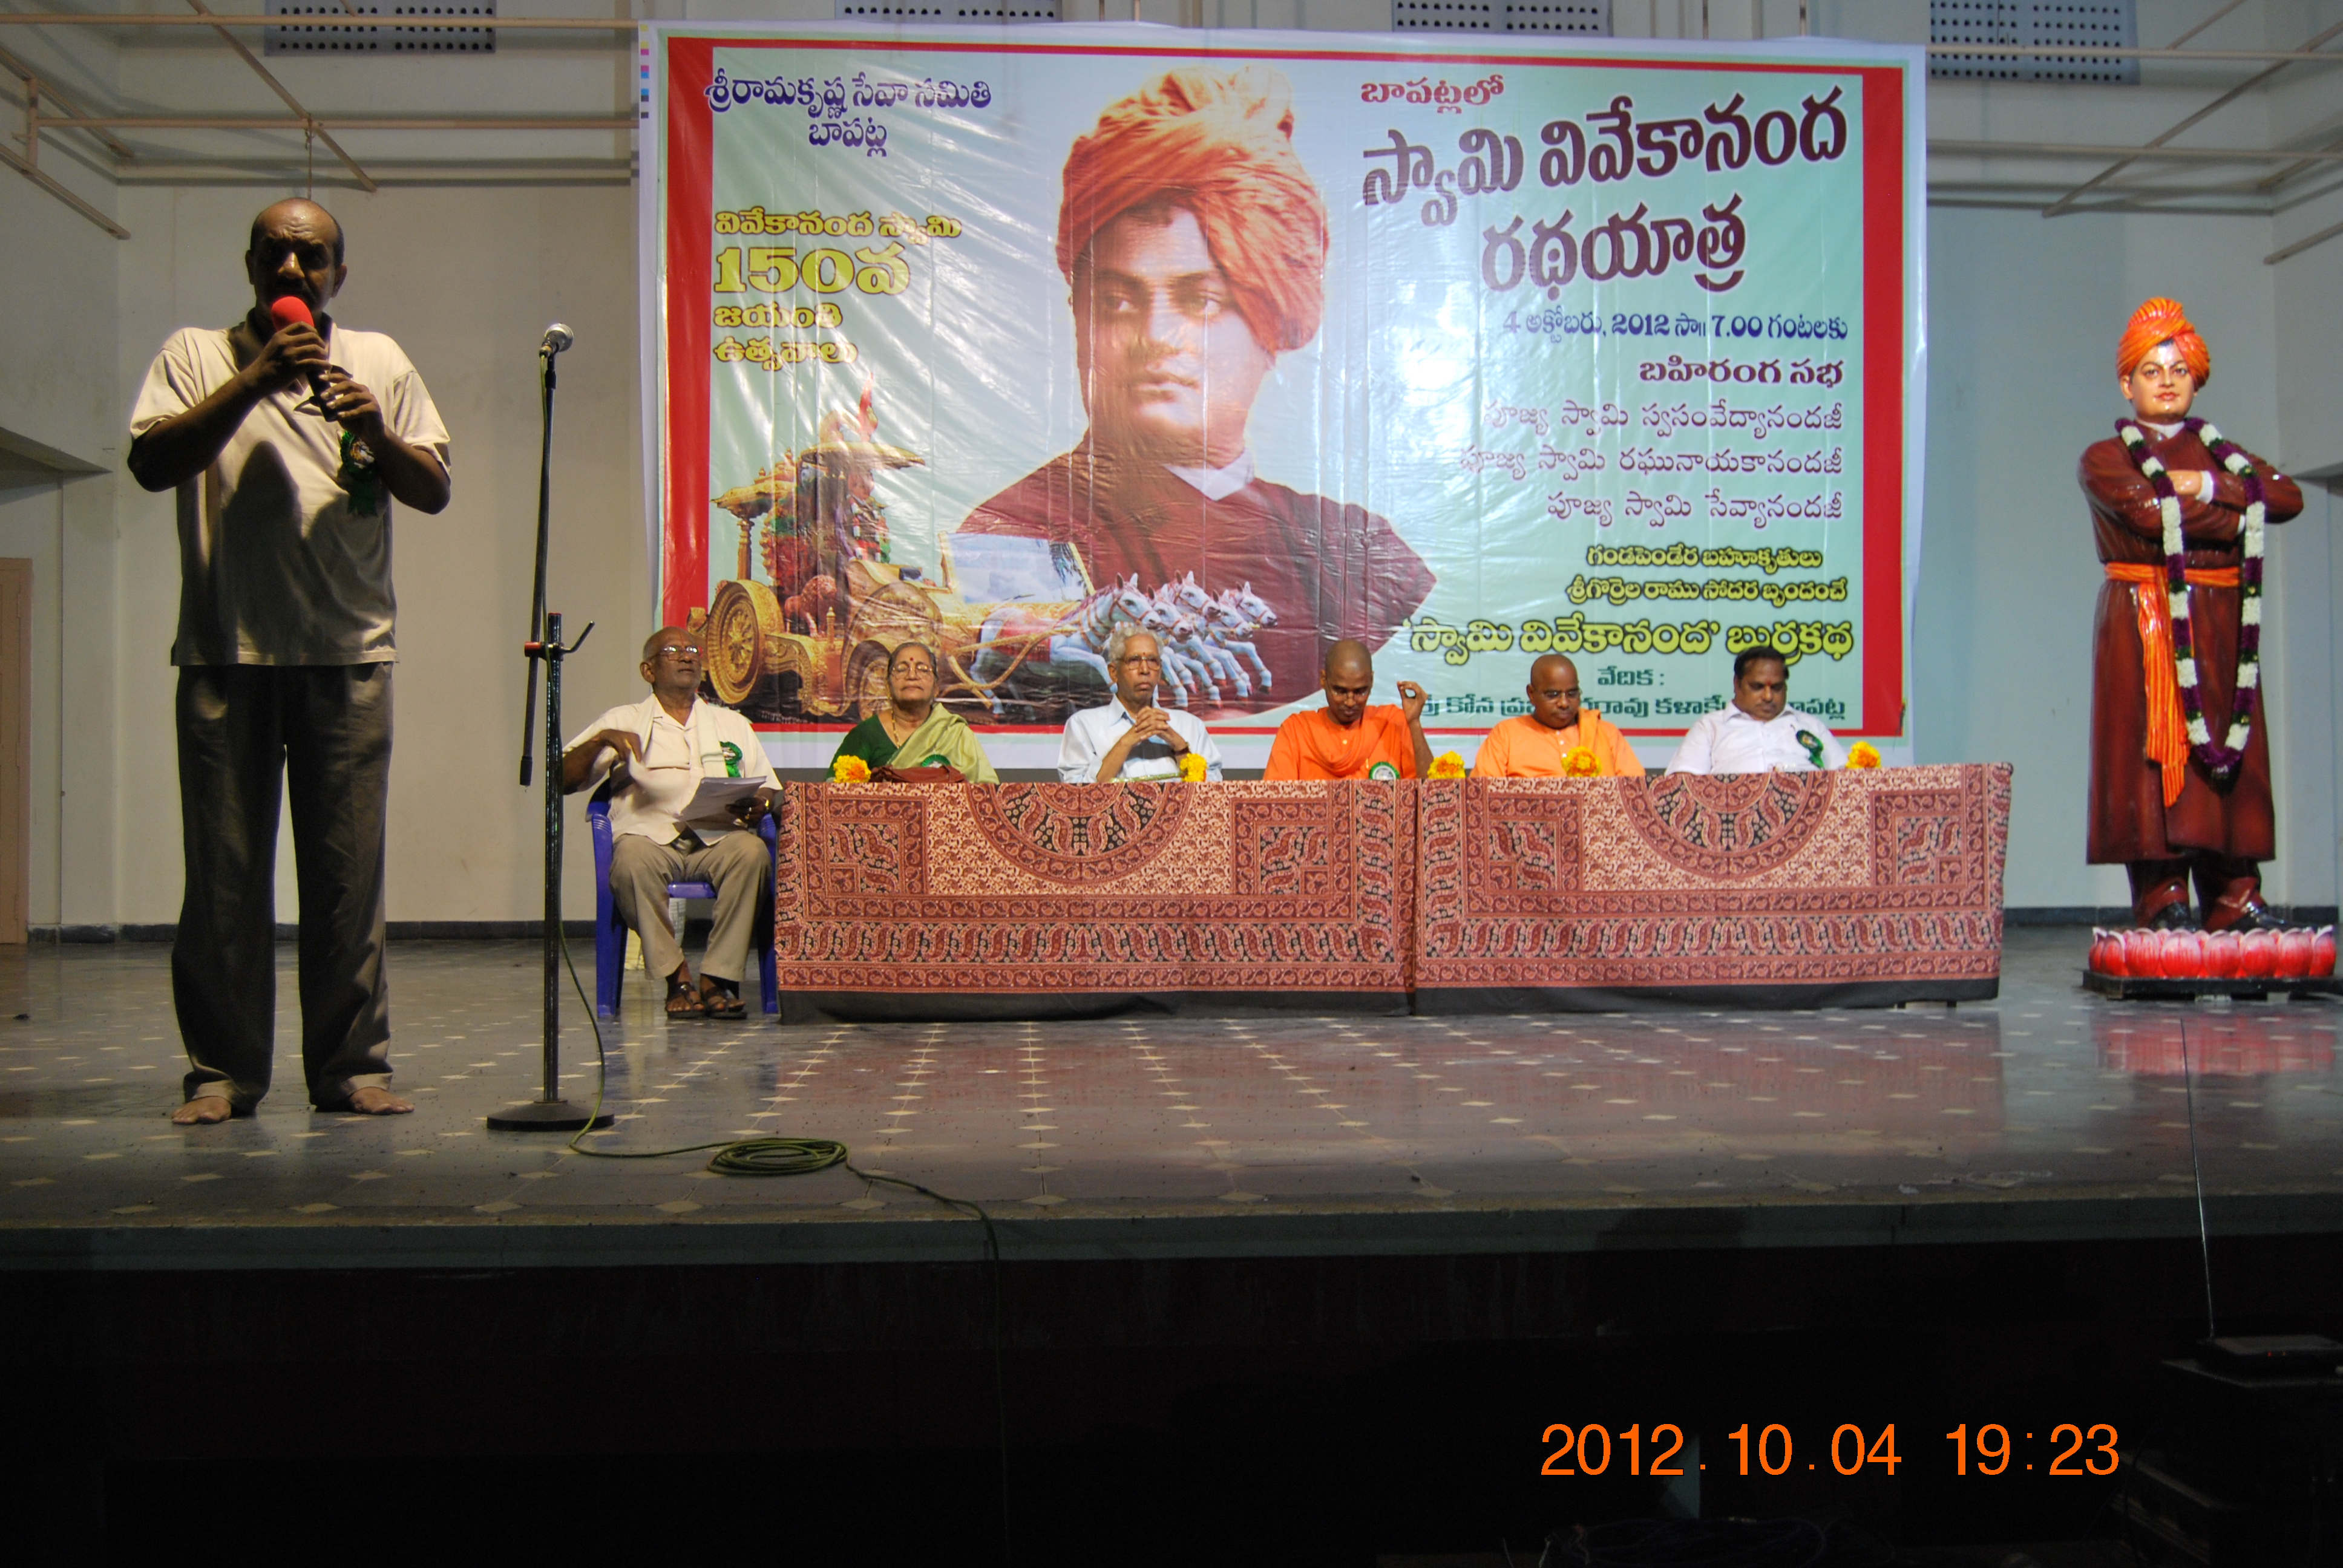 Evening public meeting in Kona Kalakshetram